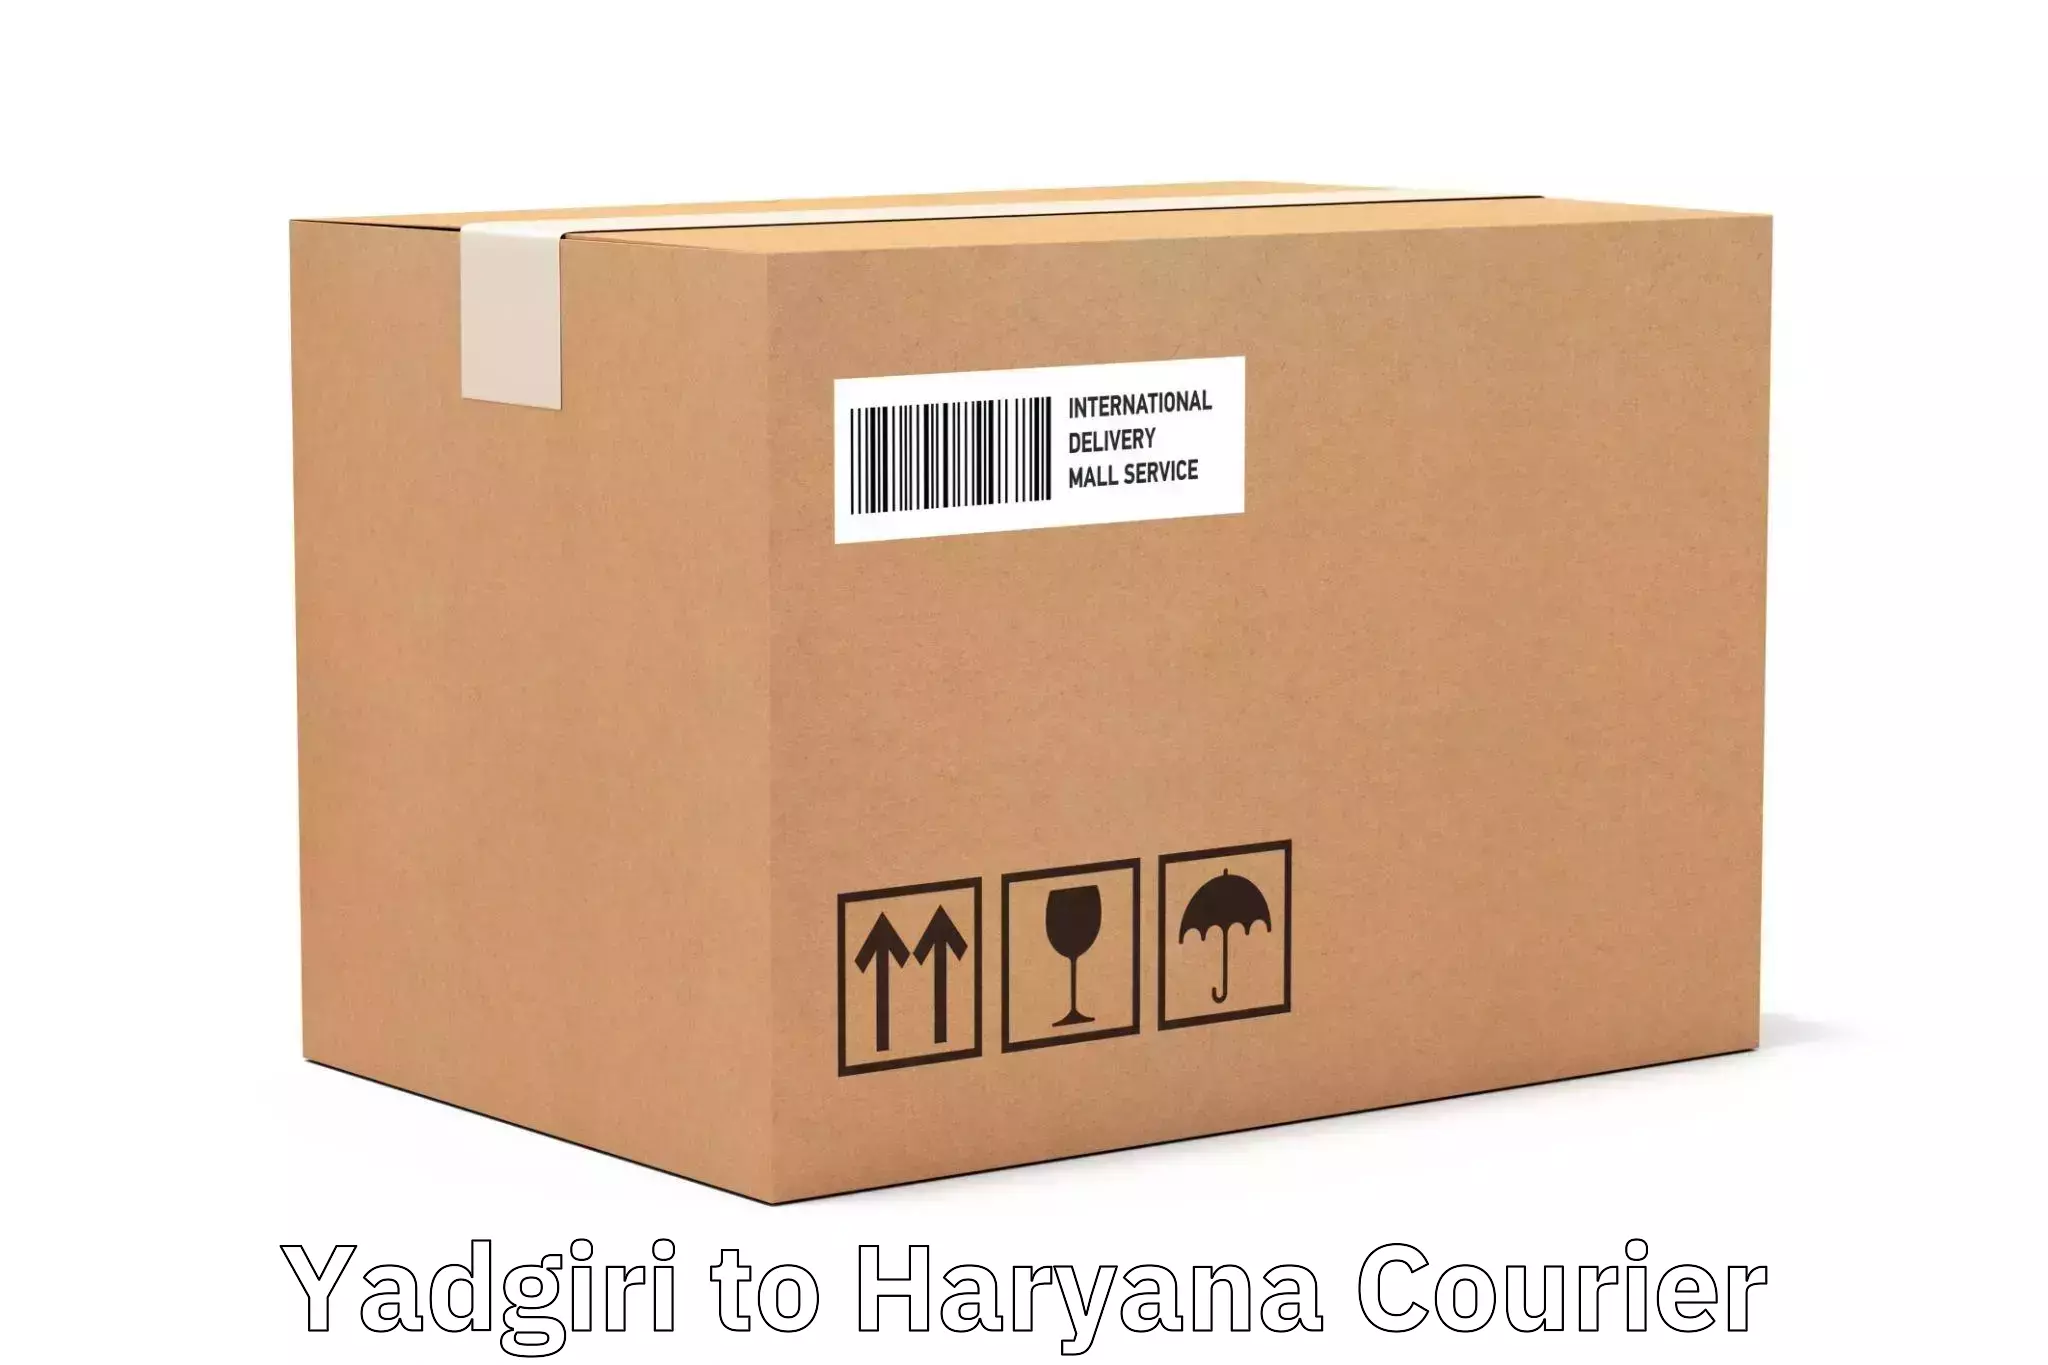 Parcel handling and care Yadgiri to NCR Haryana